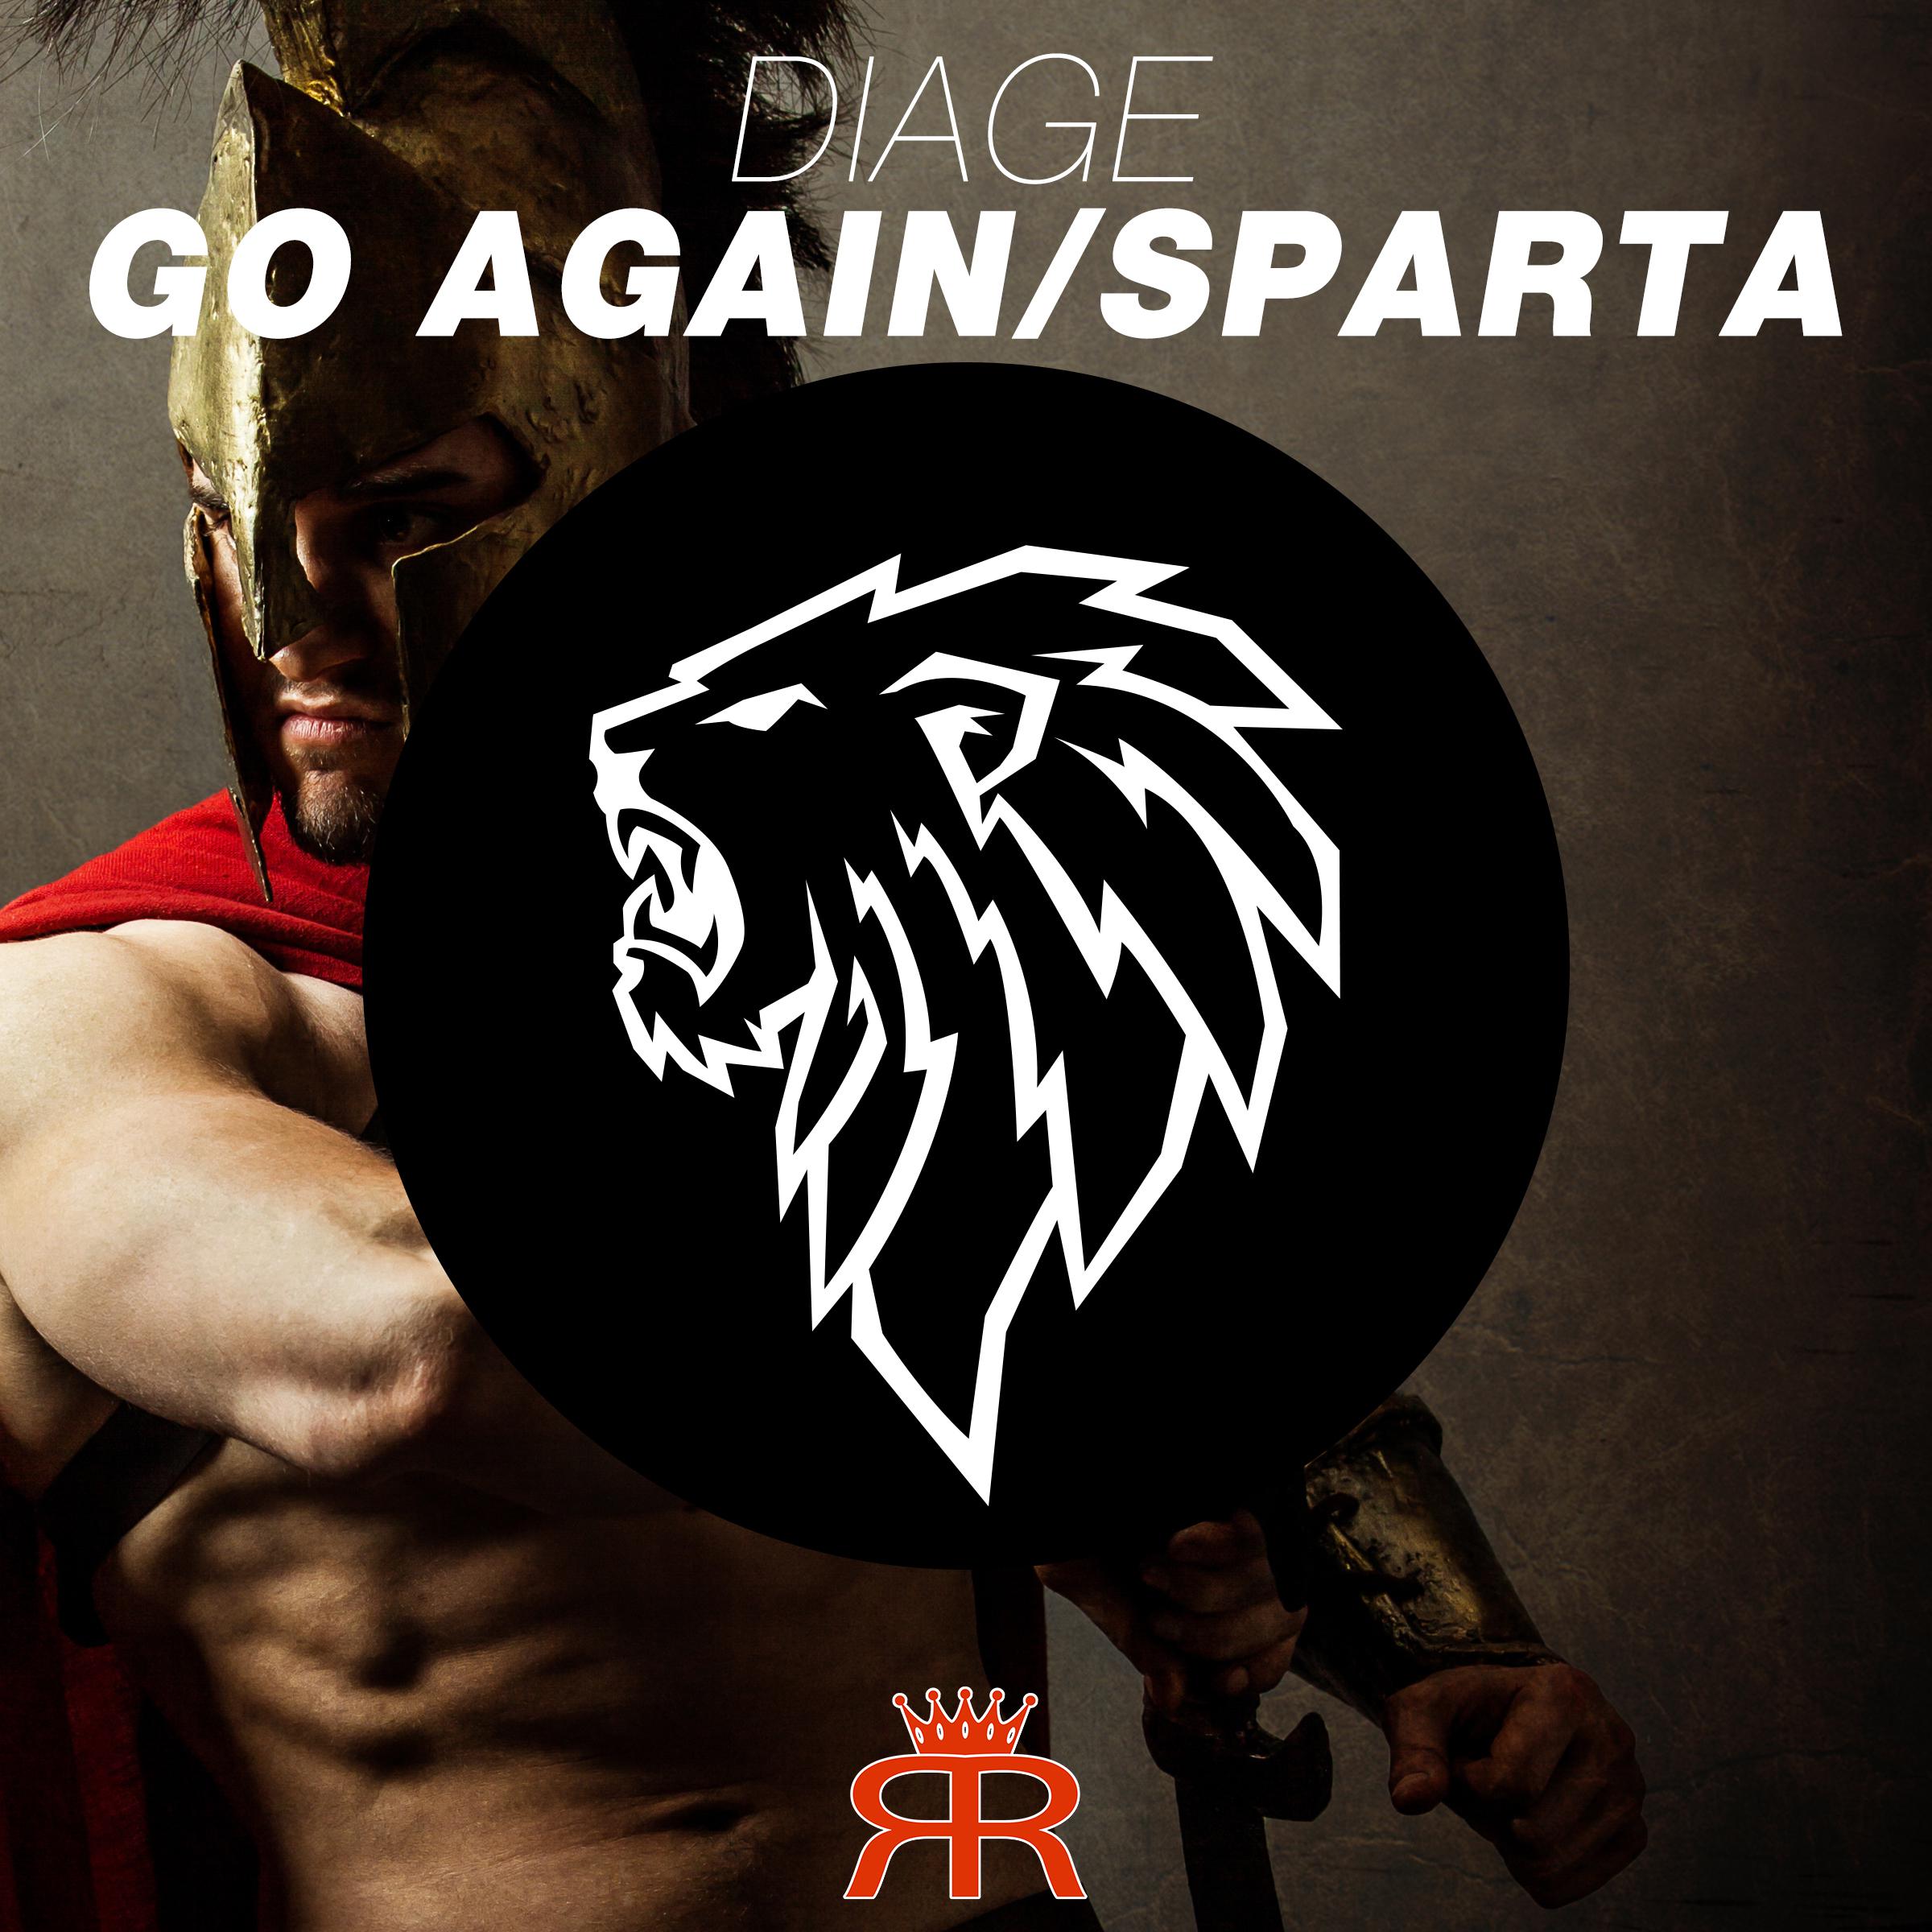 Go Again / Sparta